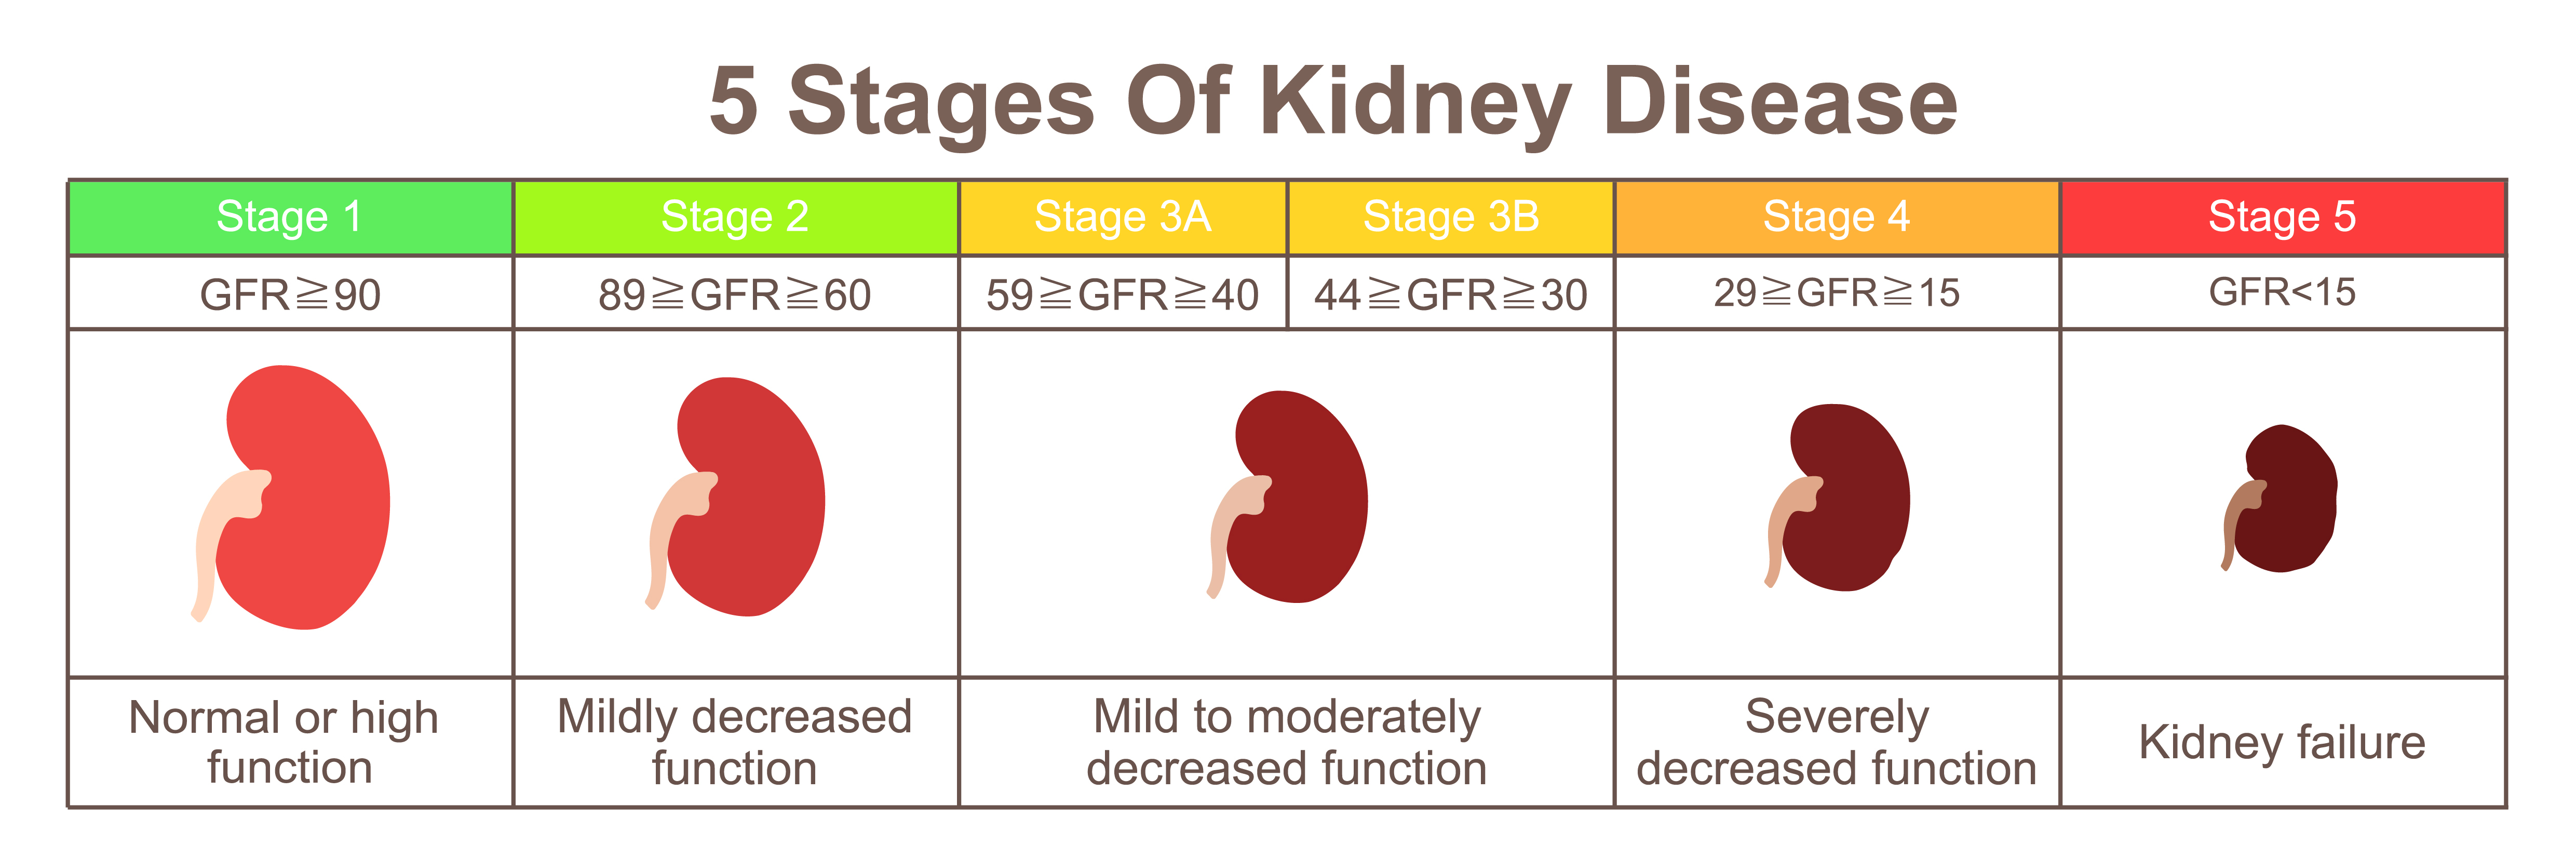 5 stages of kidney disease image